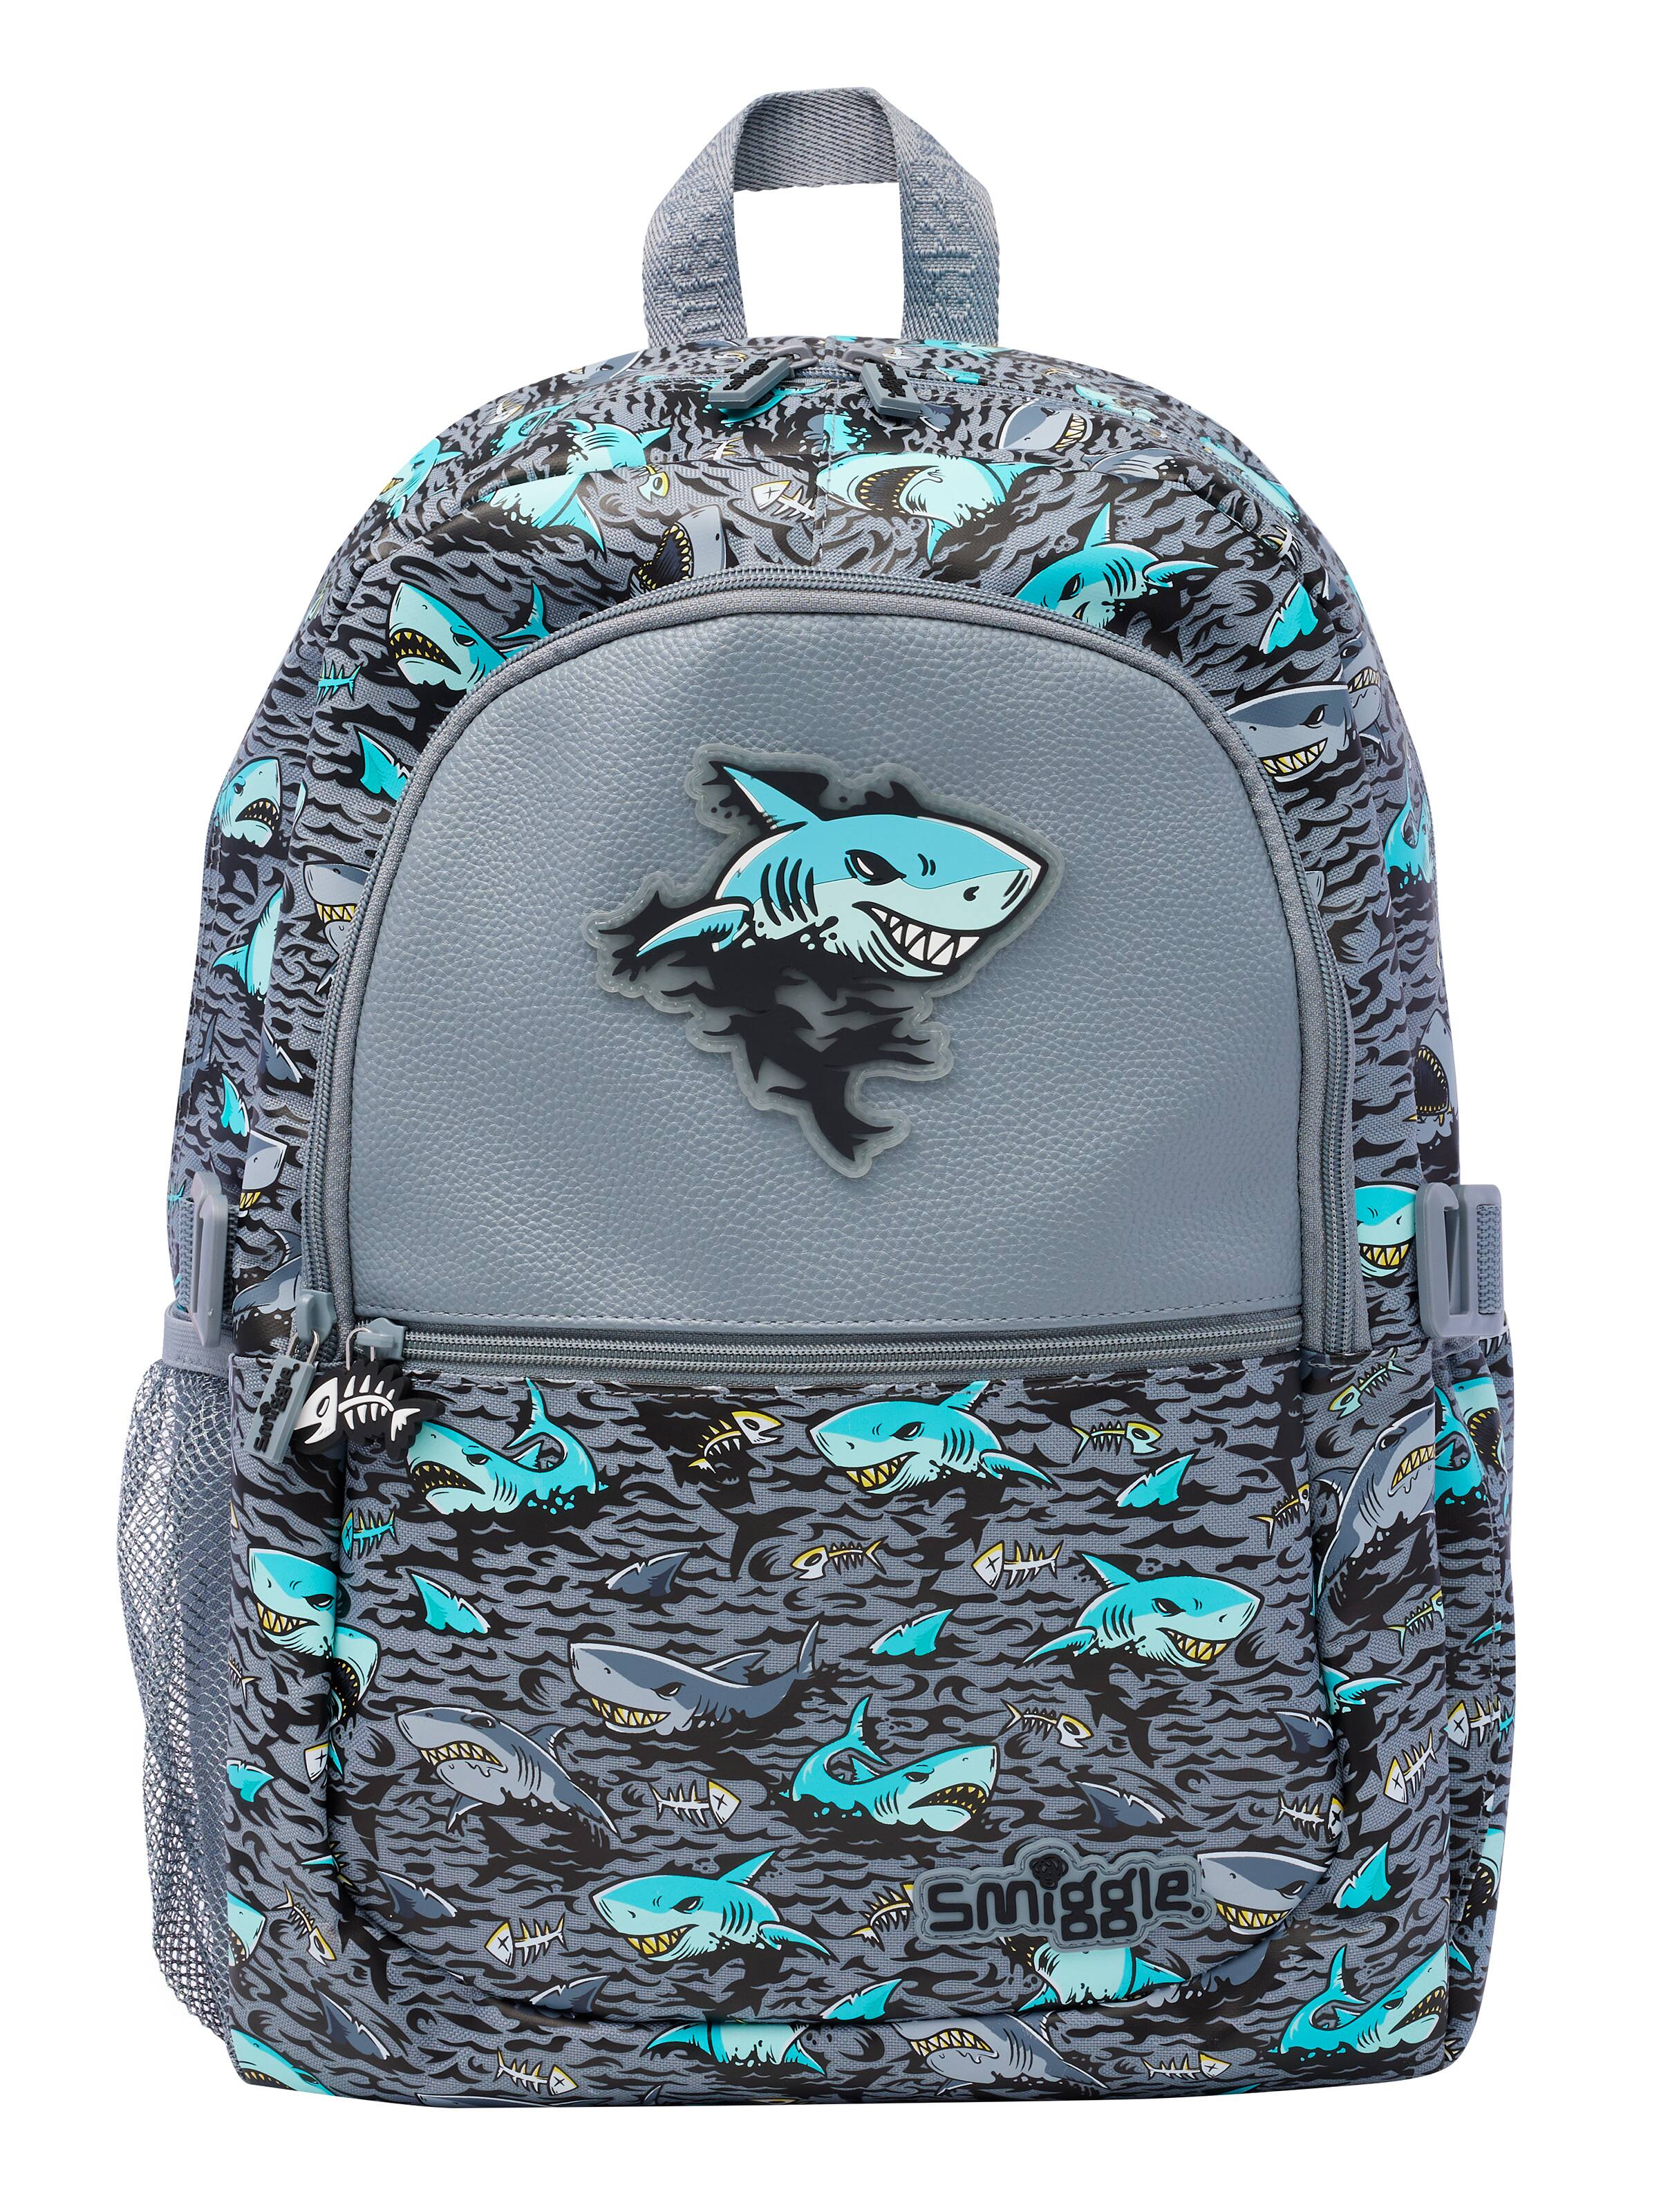 Smiggle School Bag Kangaroo Beach Gemma Junior Character Backpack Kids Gift  Bag